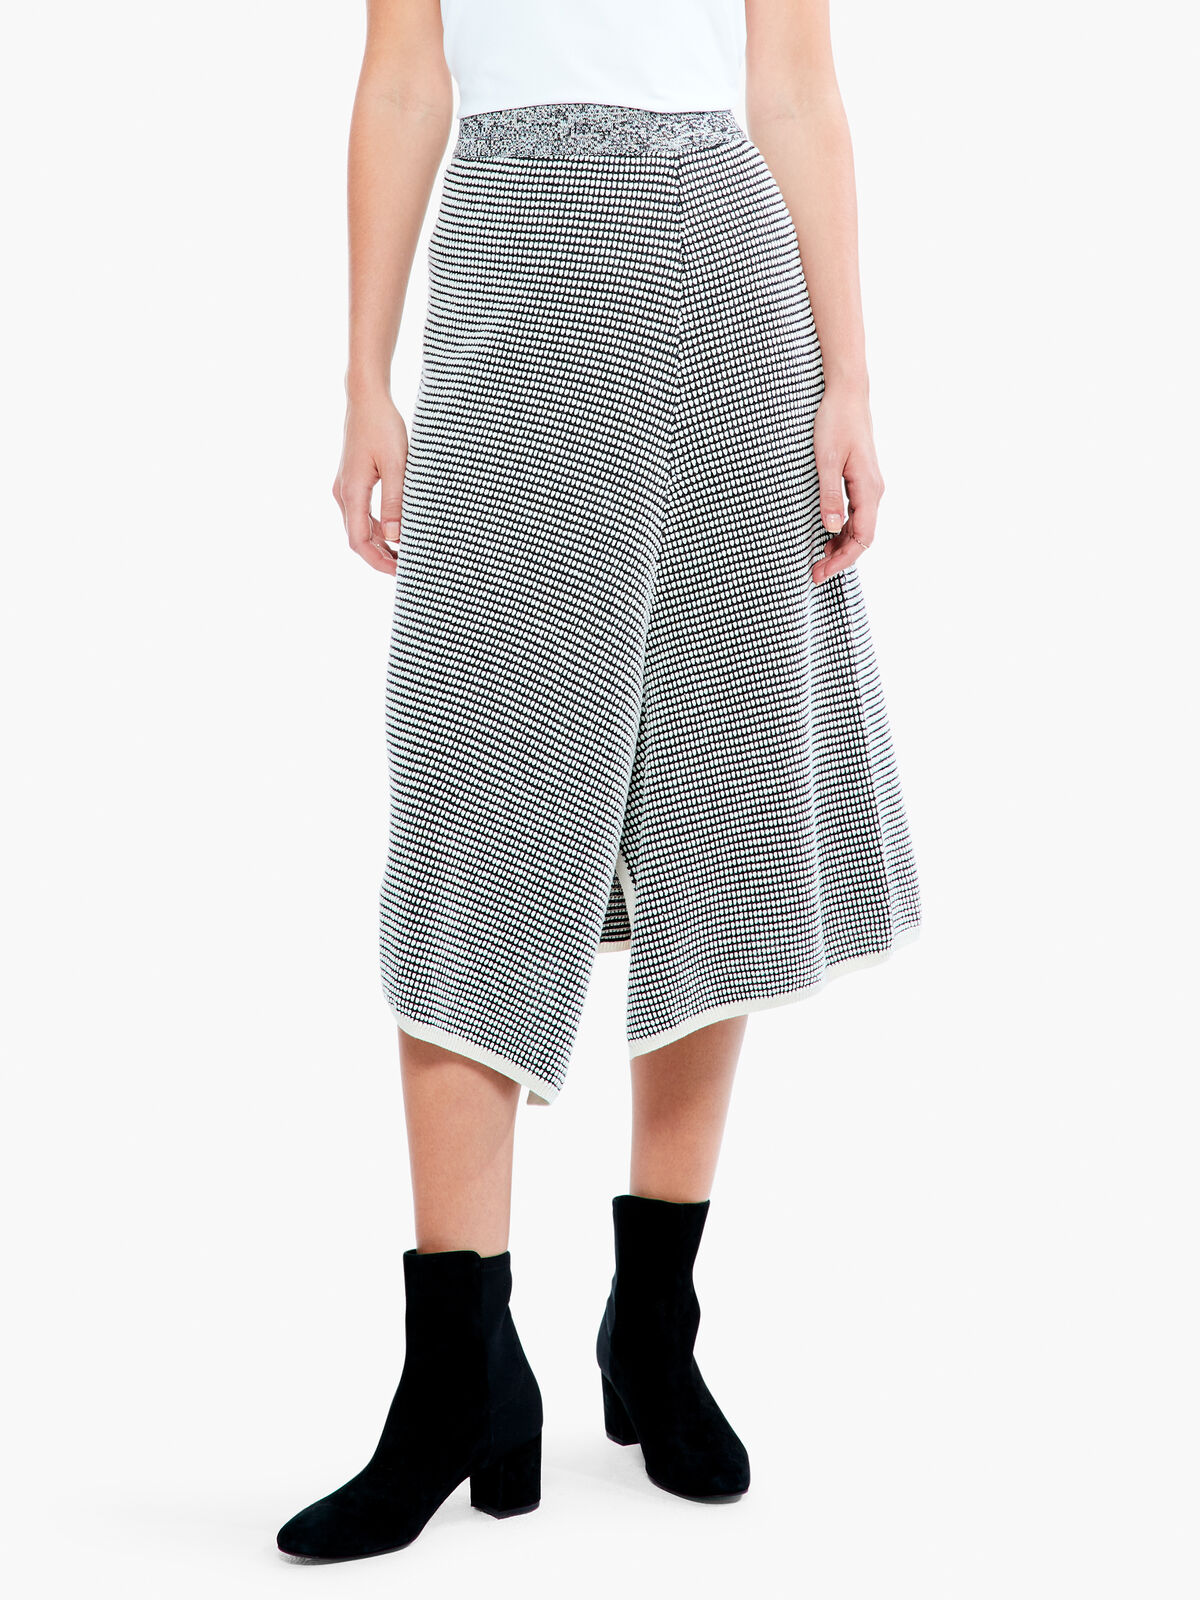 Pixel Knit Skirt